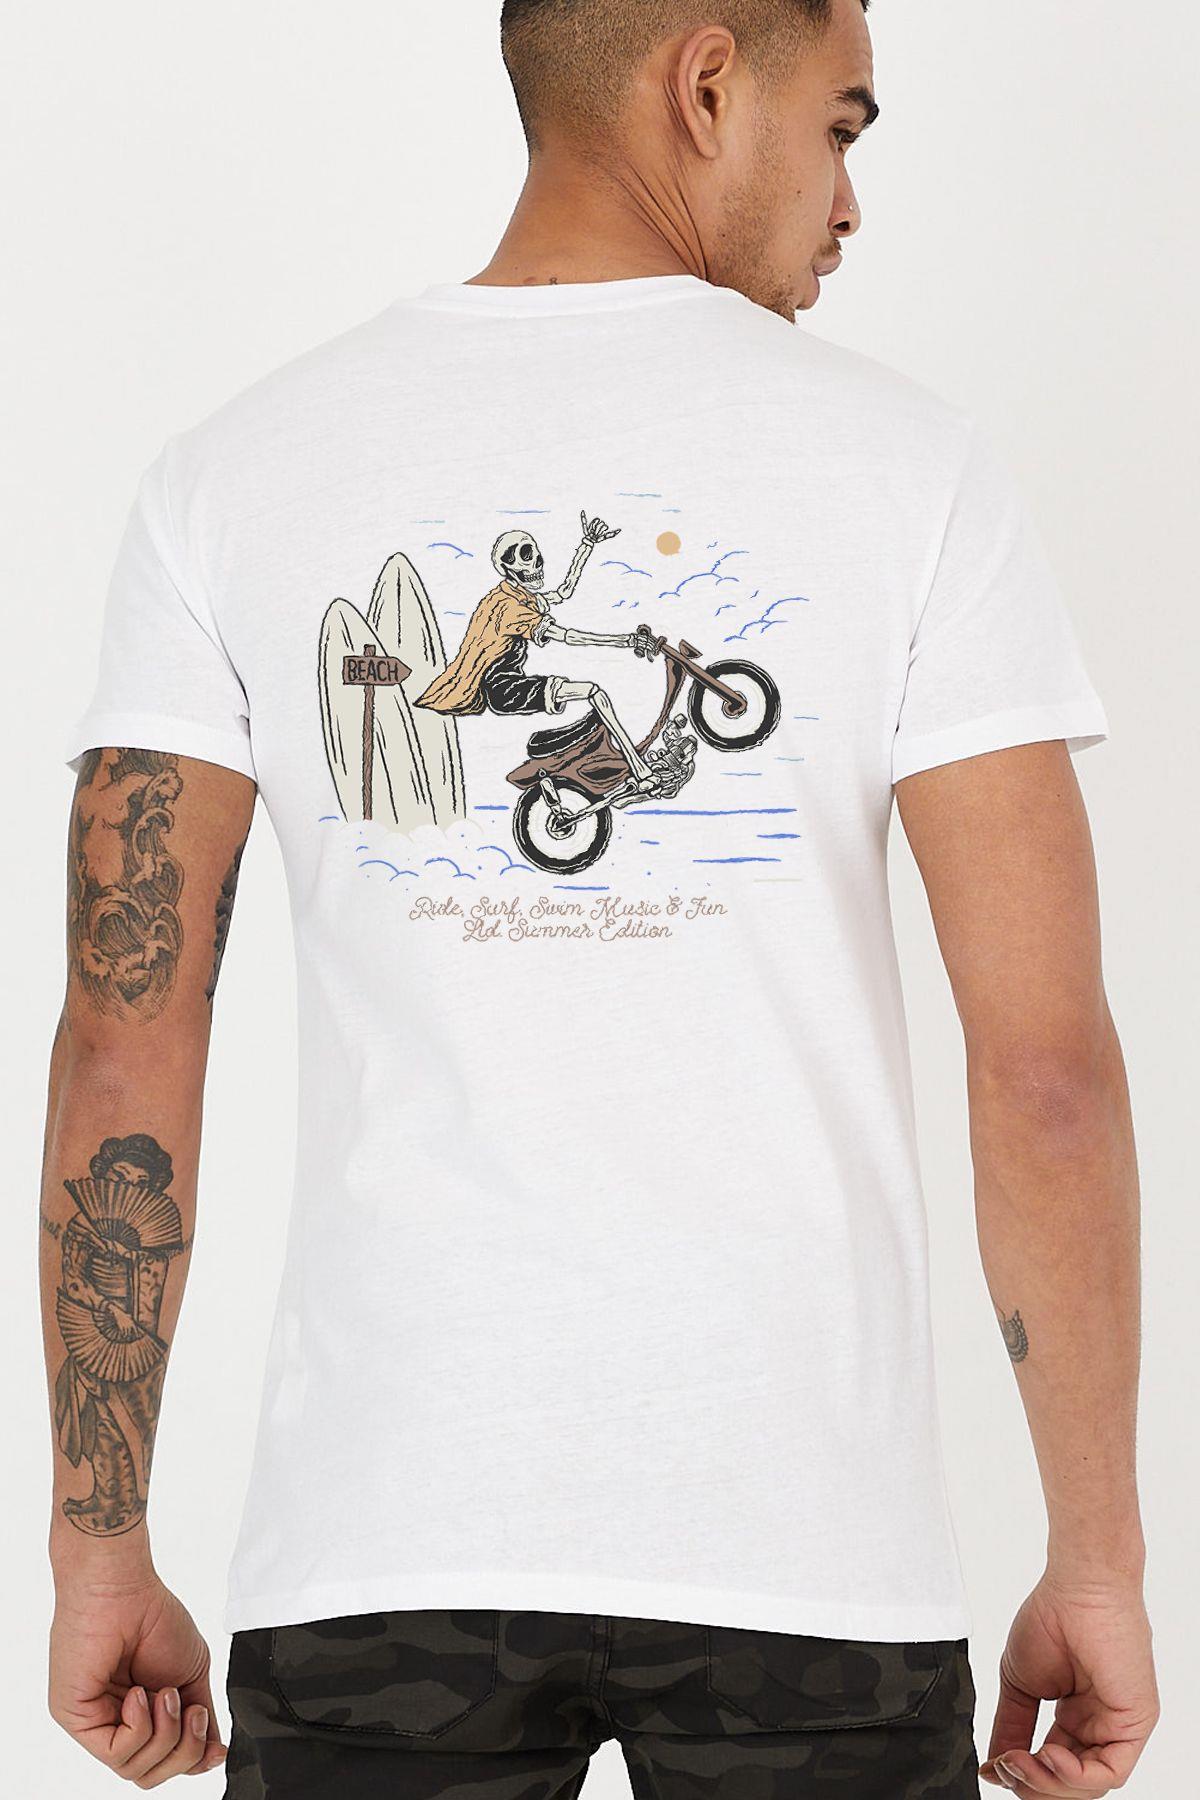 Summer Rider Back Printed Bike Crew Neck Men's T -shirt